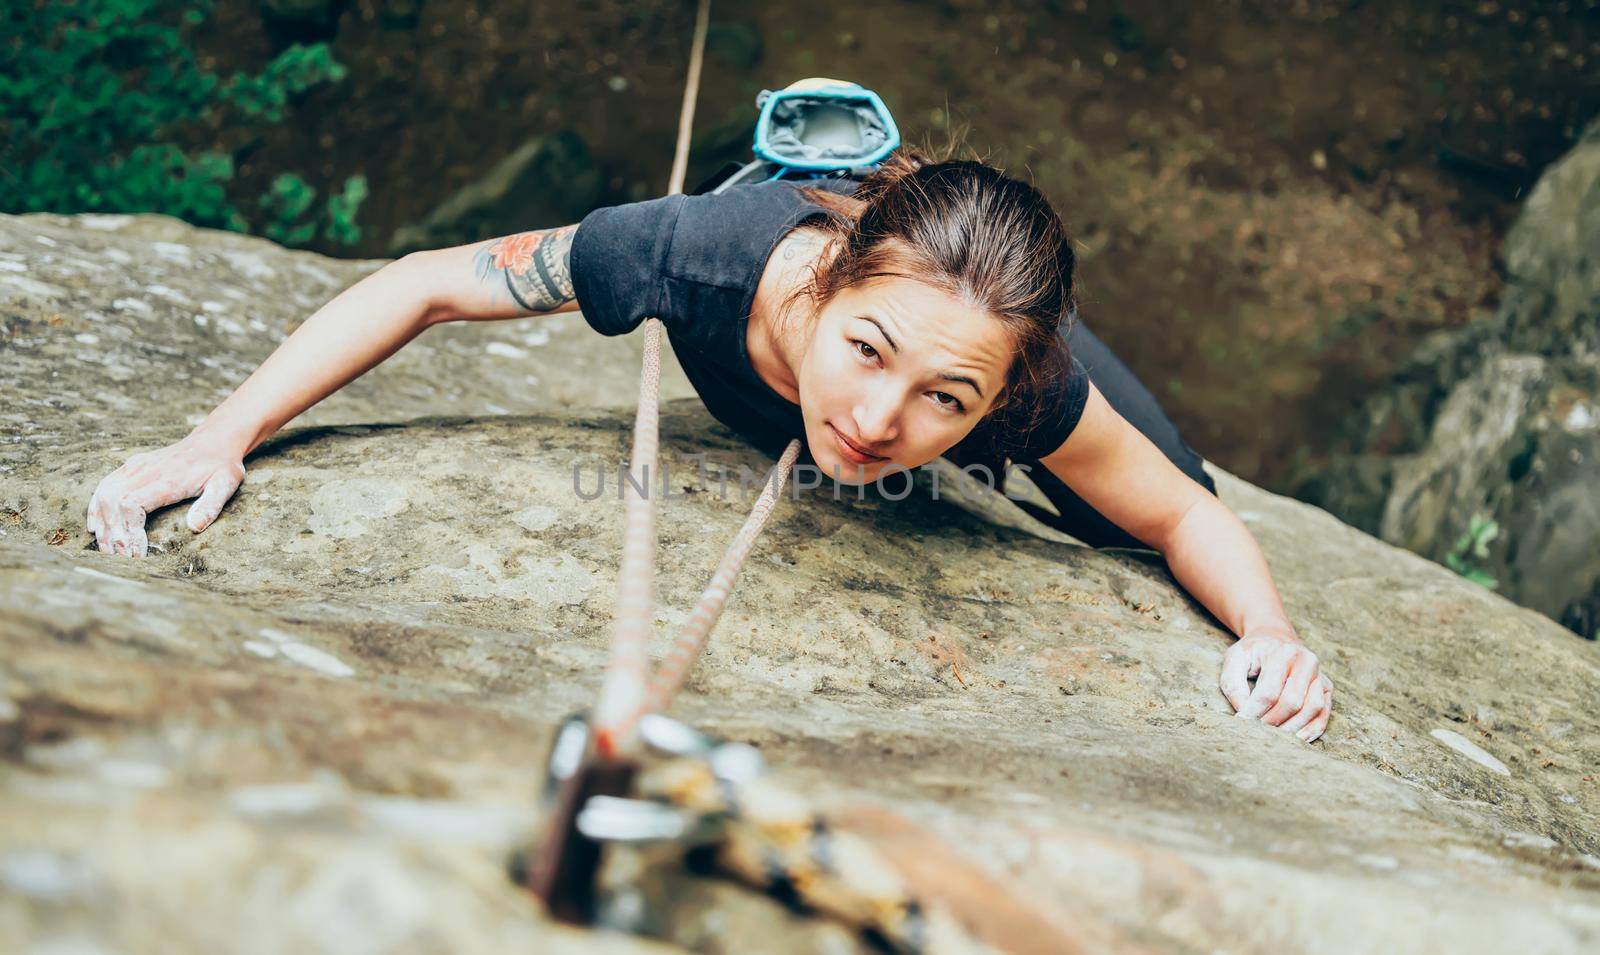 Woman climbing on cliff by alexAleksei